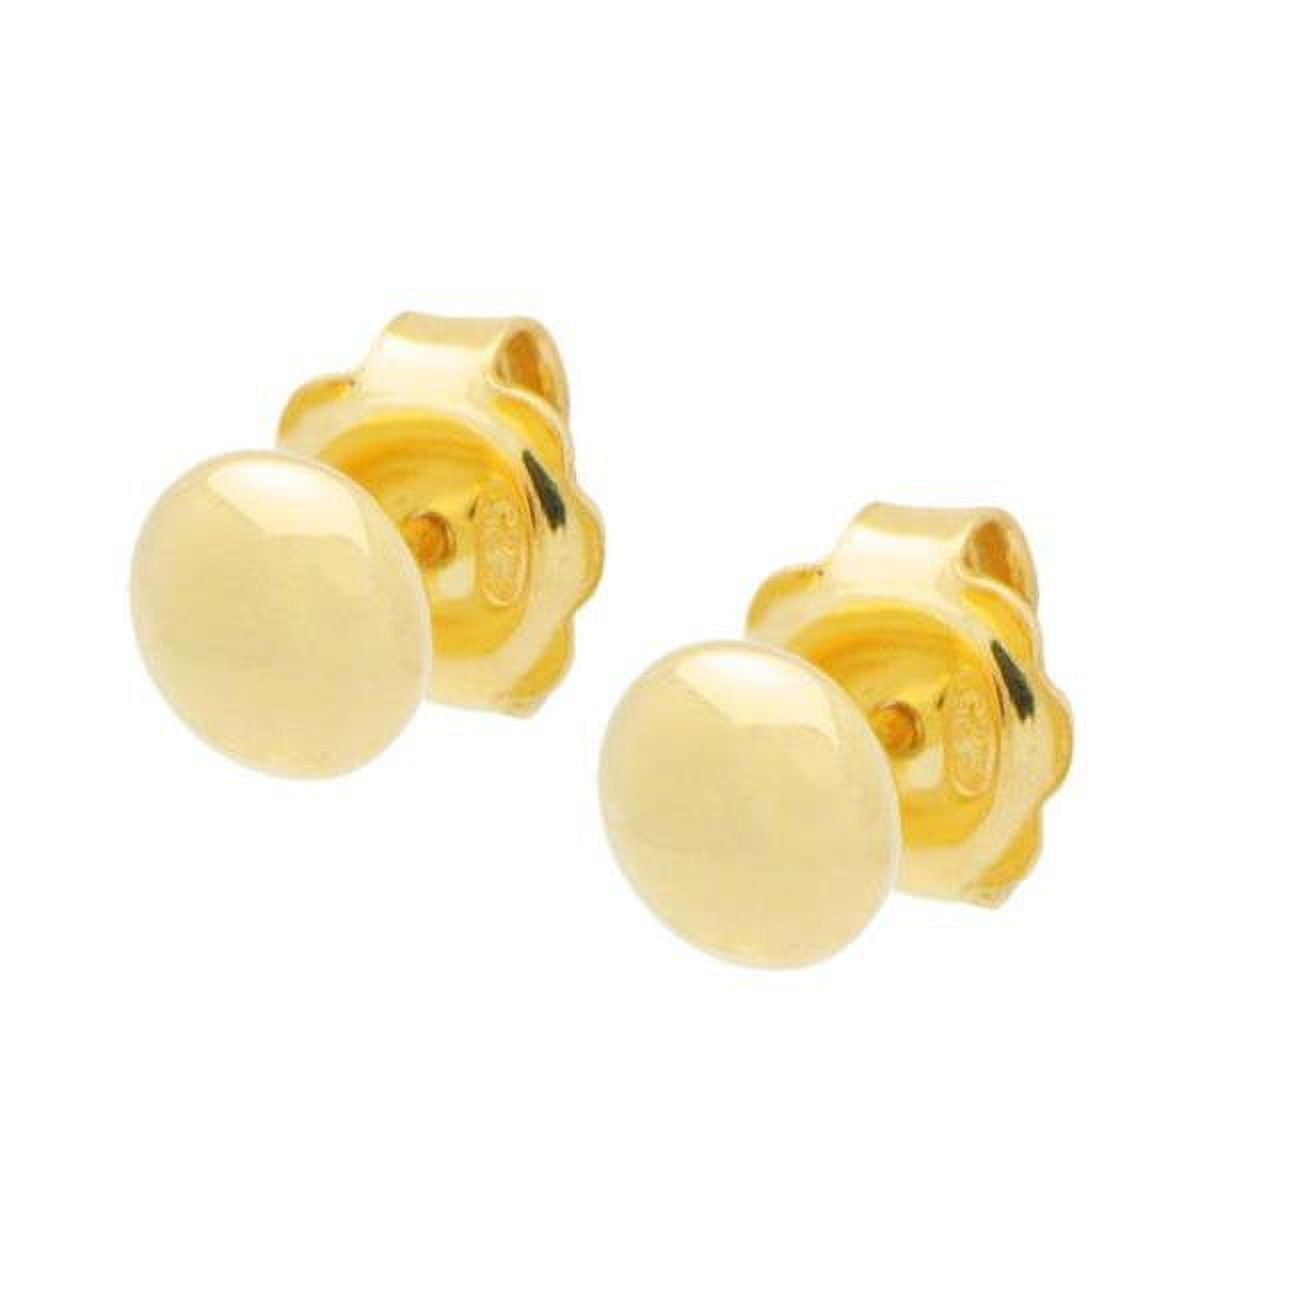 6 Mm Mirror Gold Button Stud Earrings In Sterling Silver